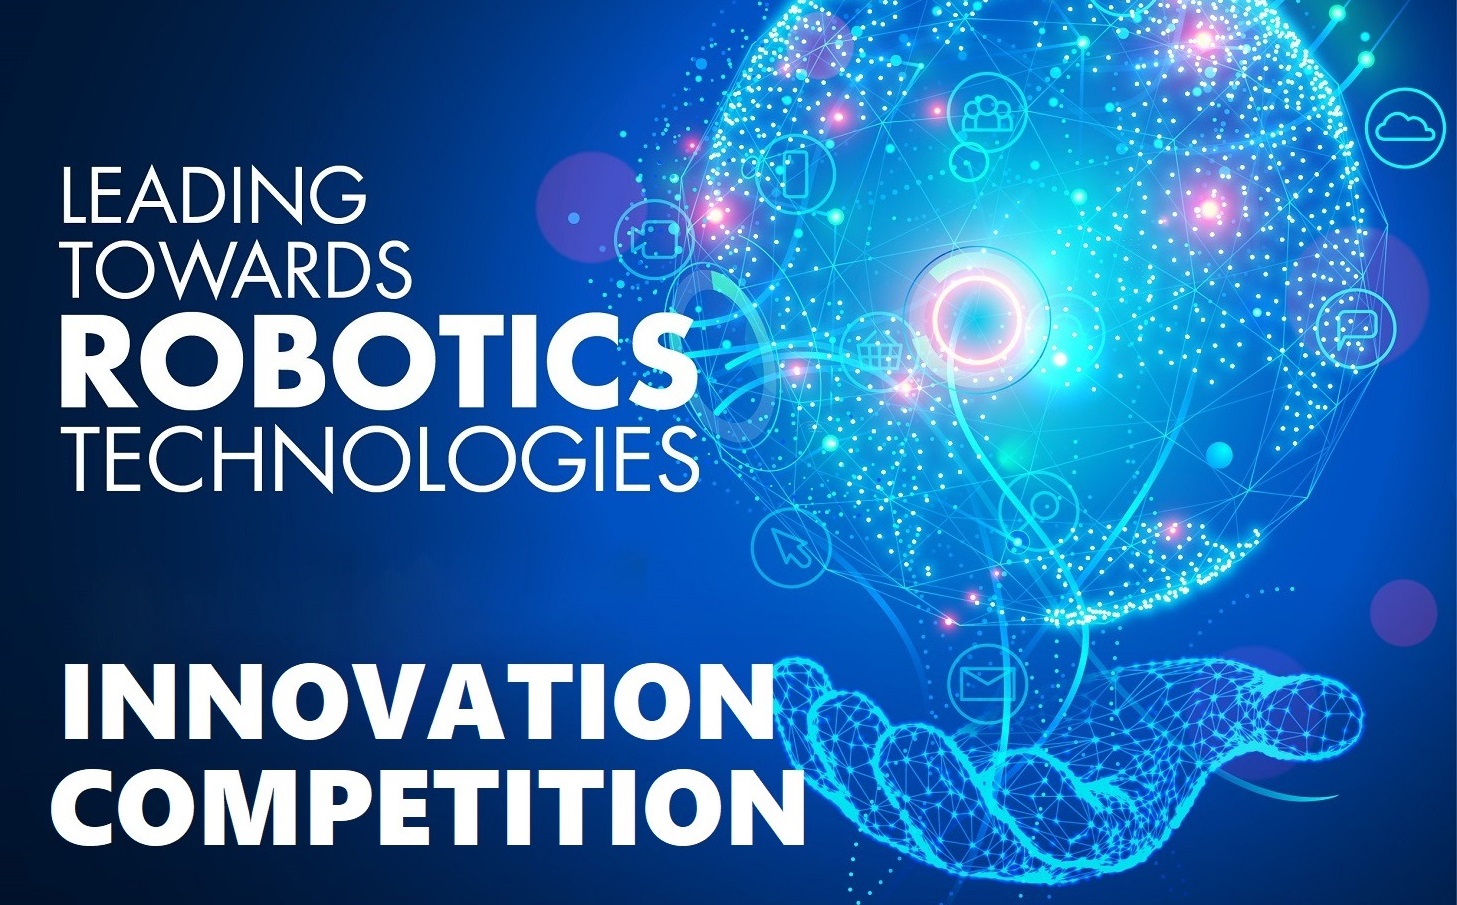 “Leading Towards Robotics Technologies” Innovation Competition